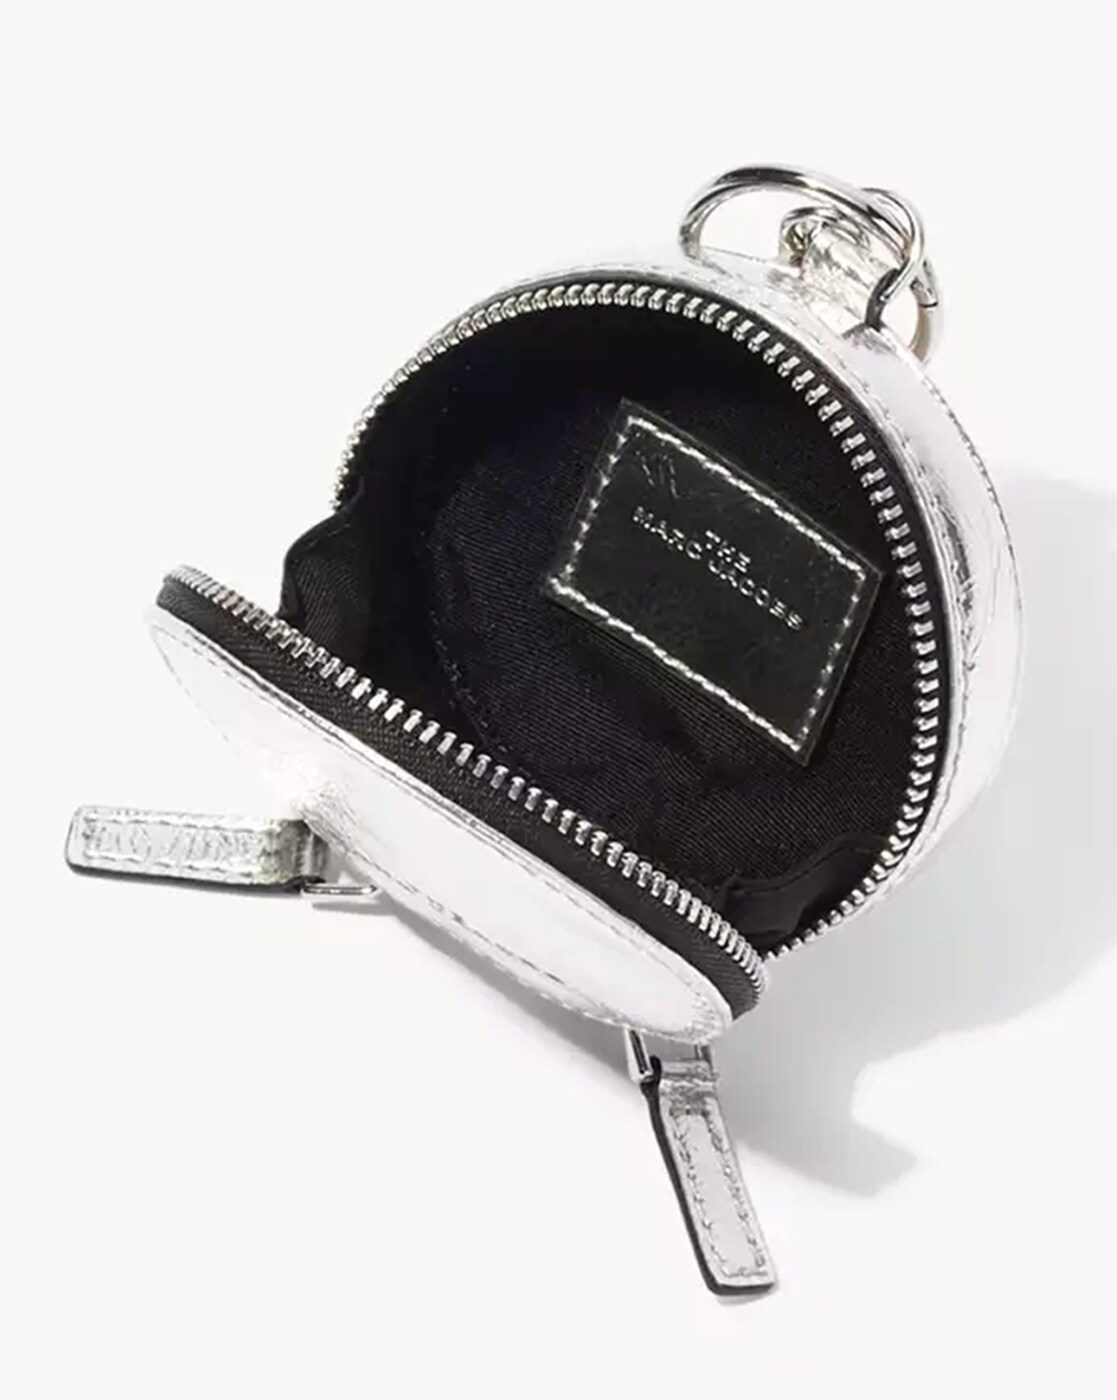 Rhine stone design cross bdoy sling bag for girls premium fashion bag with  mini coin purse